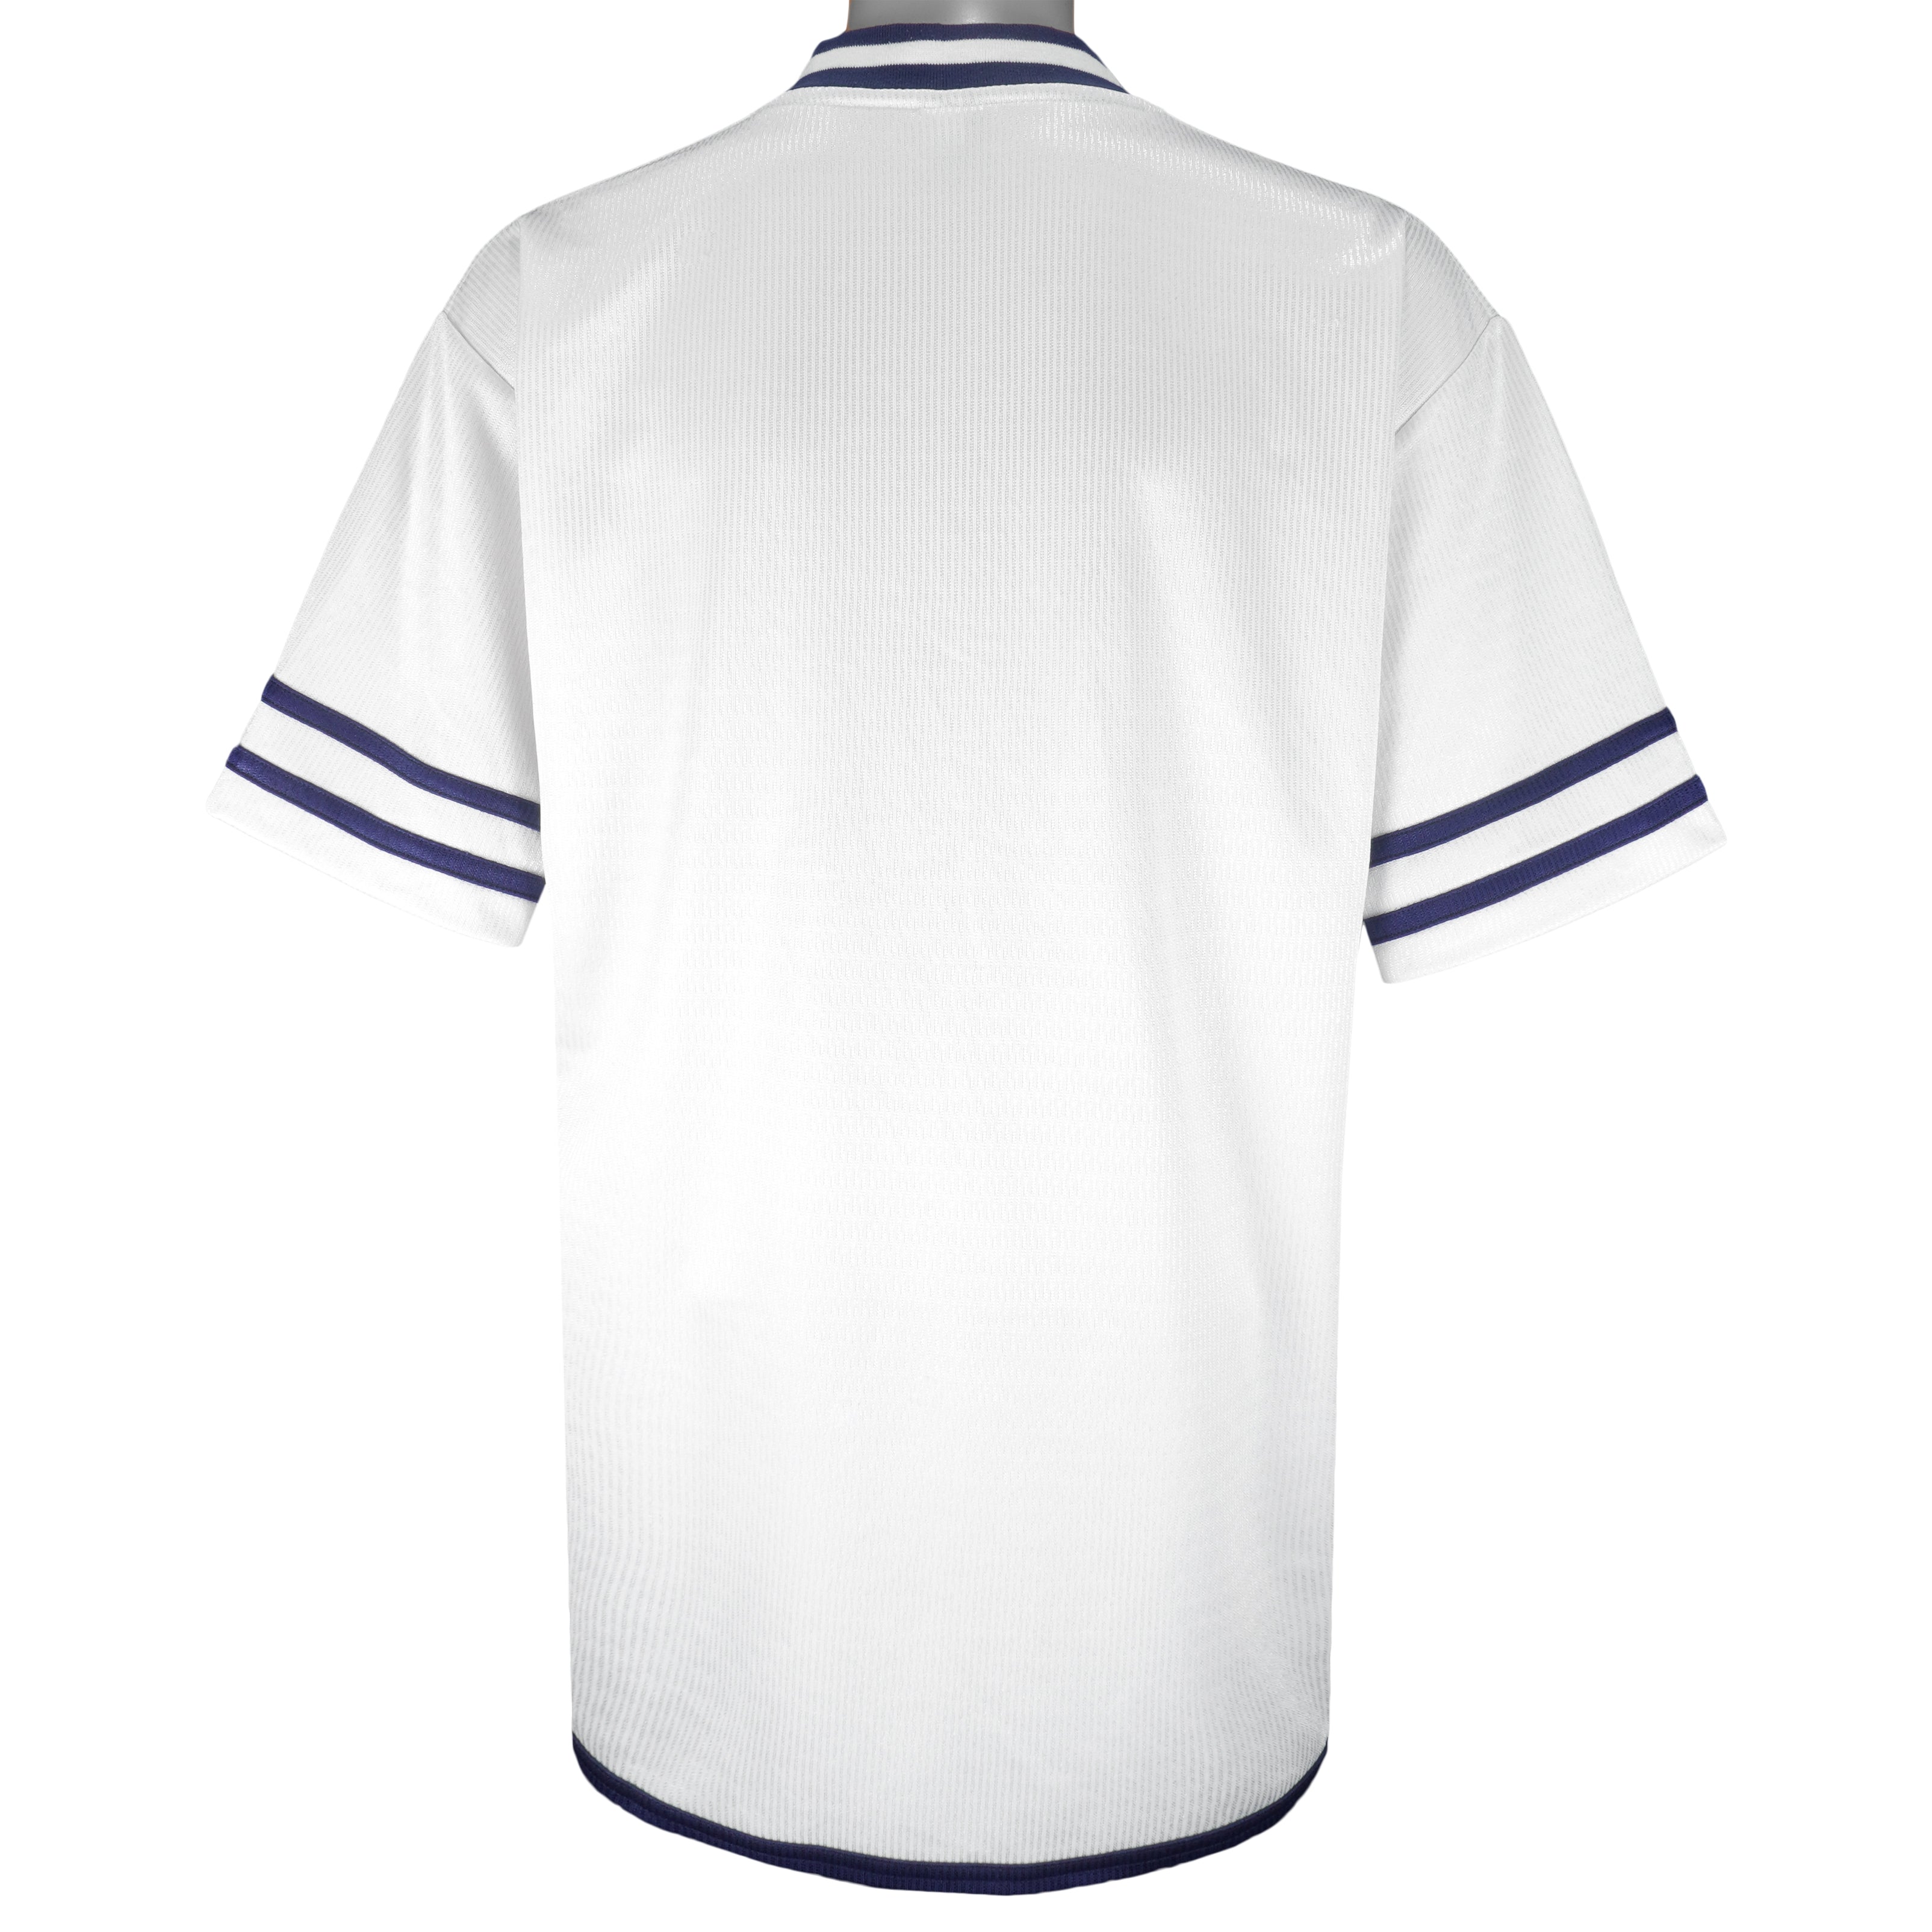 FILA T-shirt White Vintage Basketball Jersey 90s Hip-hop -  Denmark